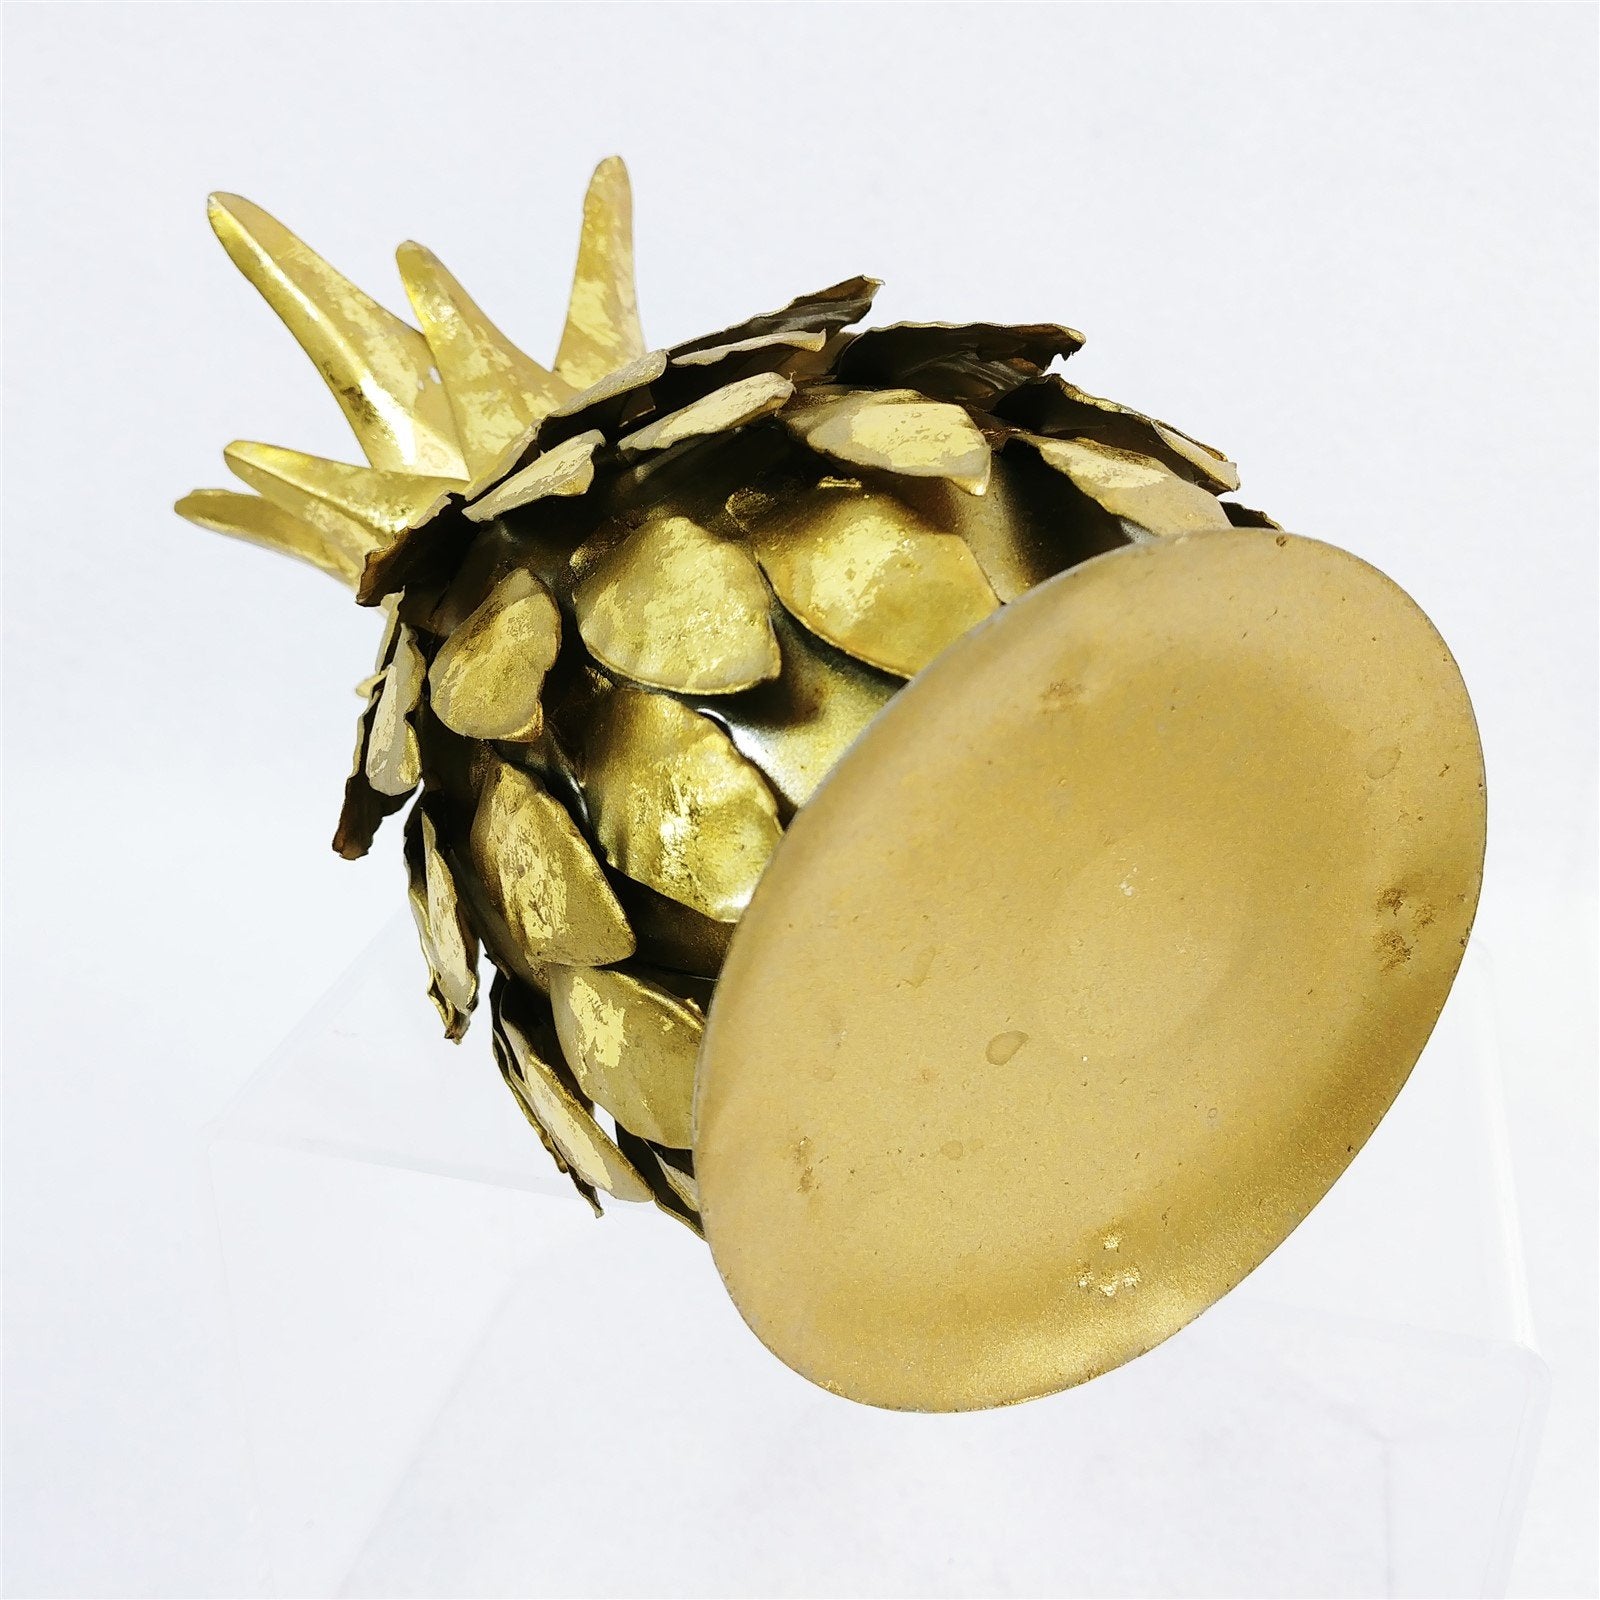 Candle Holder Taper Candle Holder Pineapple Design Metal Gold Finish 8"